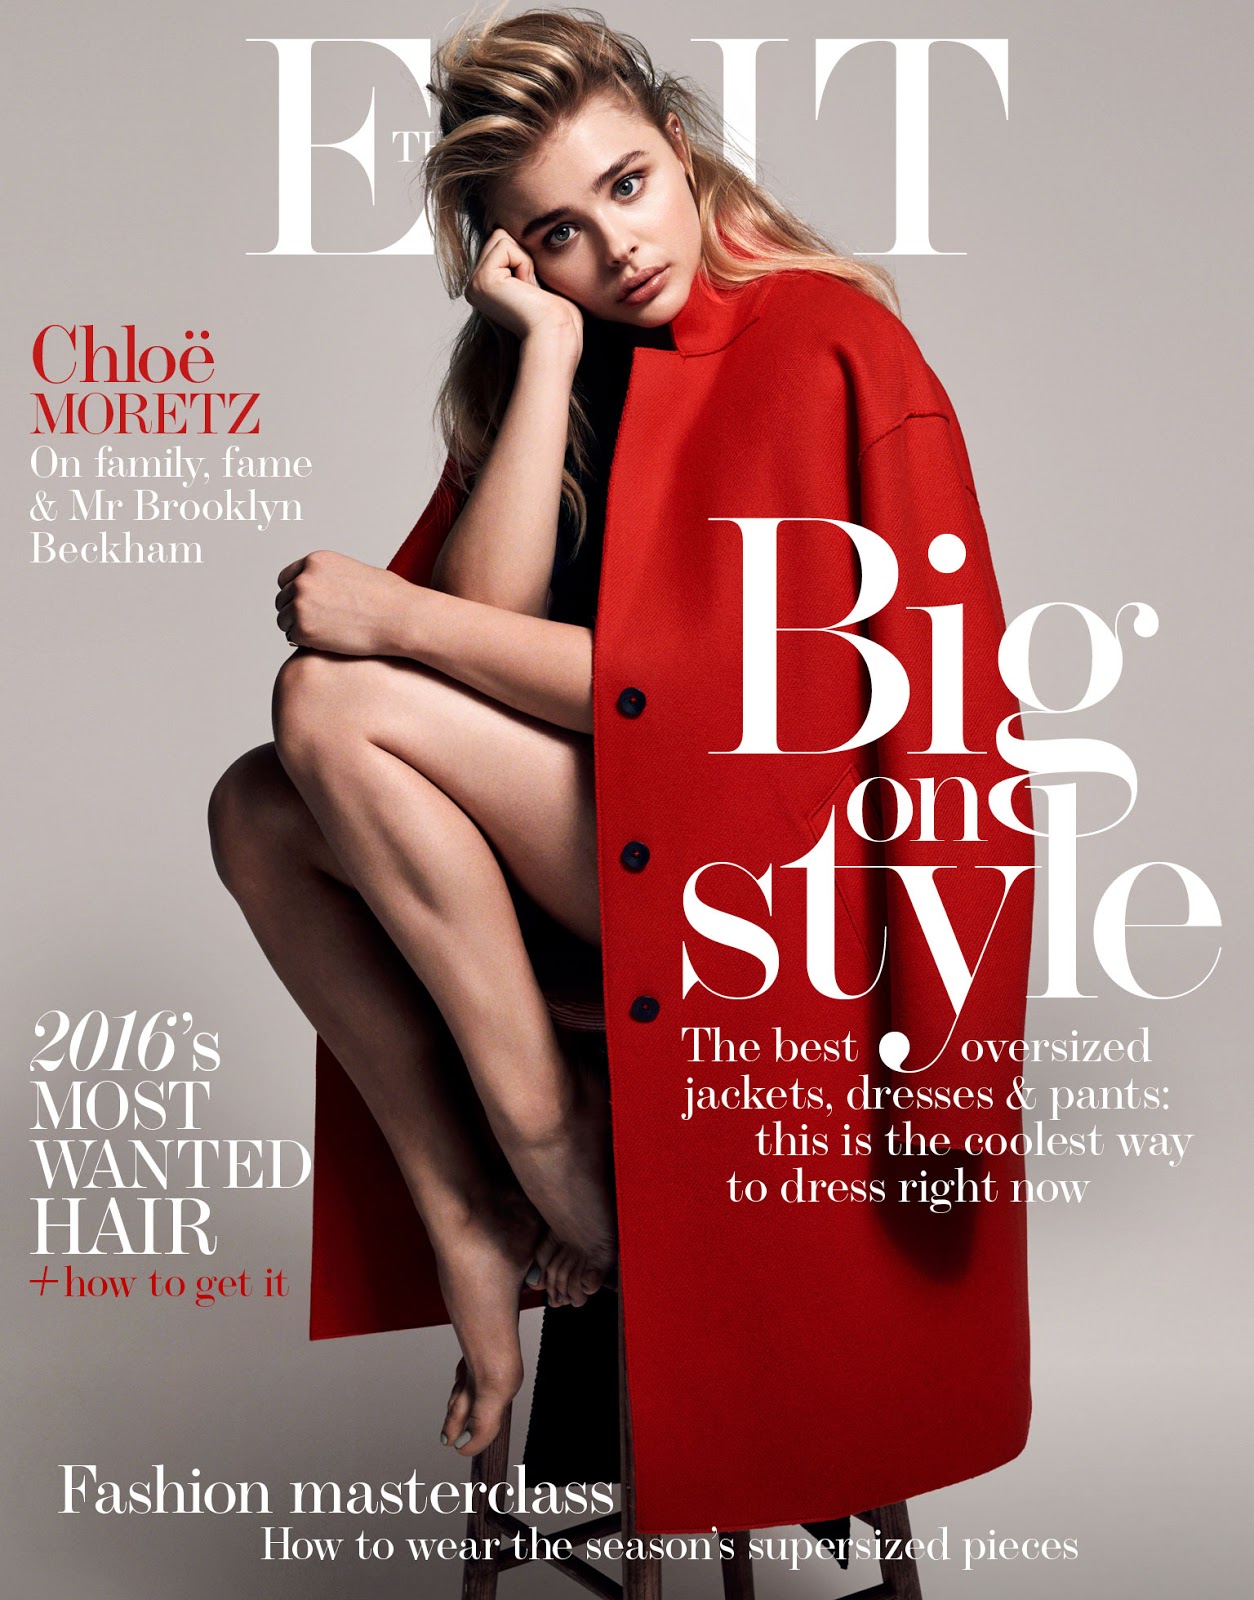 Chloë Grace Moretz On the Cover of Glamour June 2016